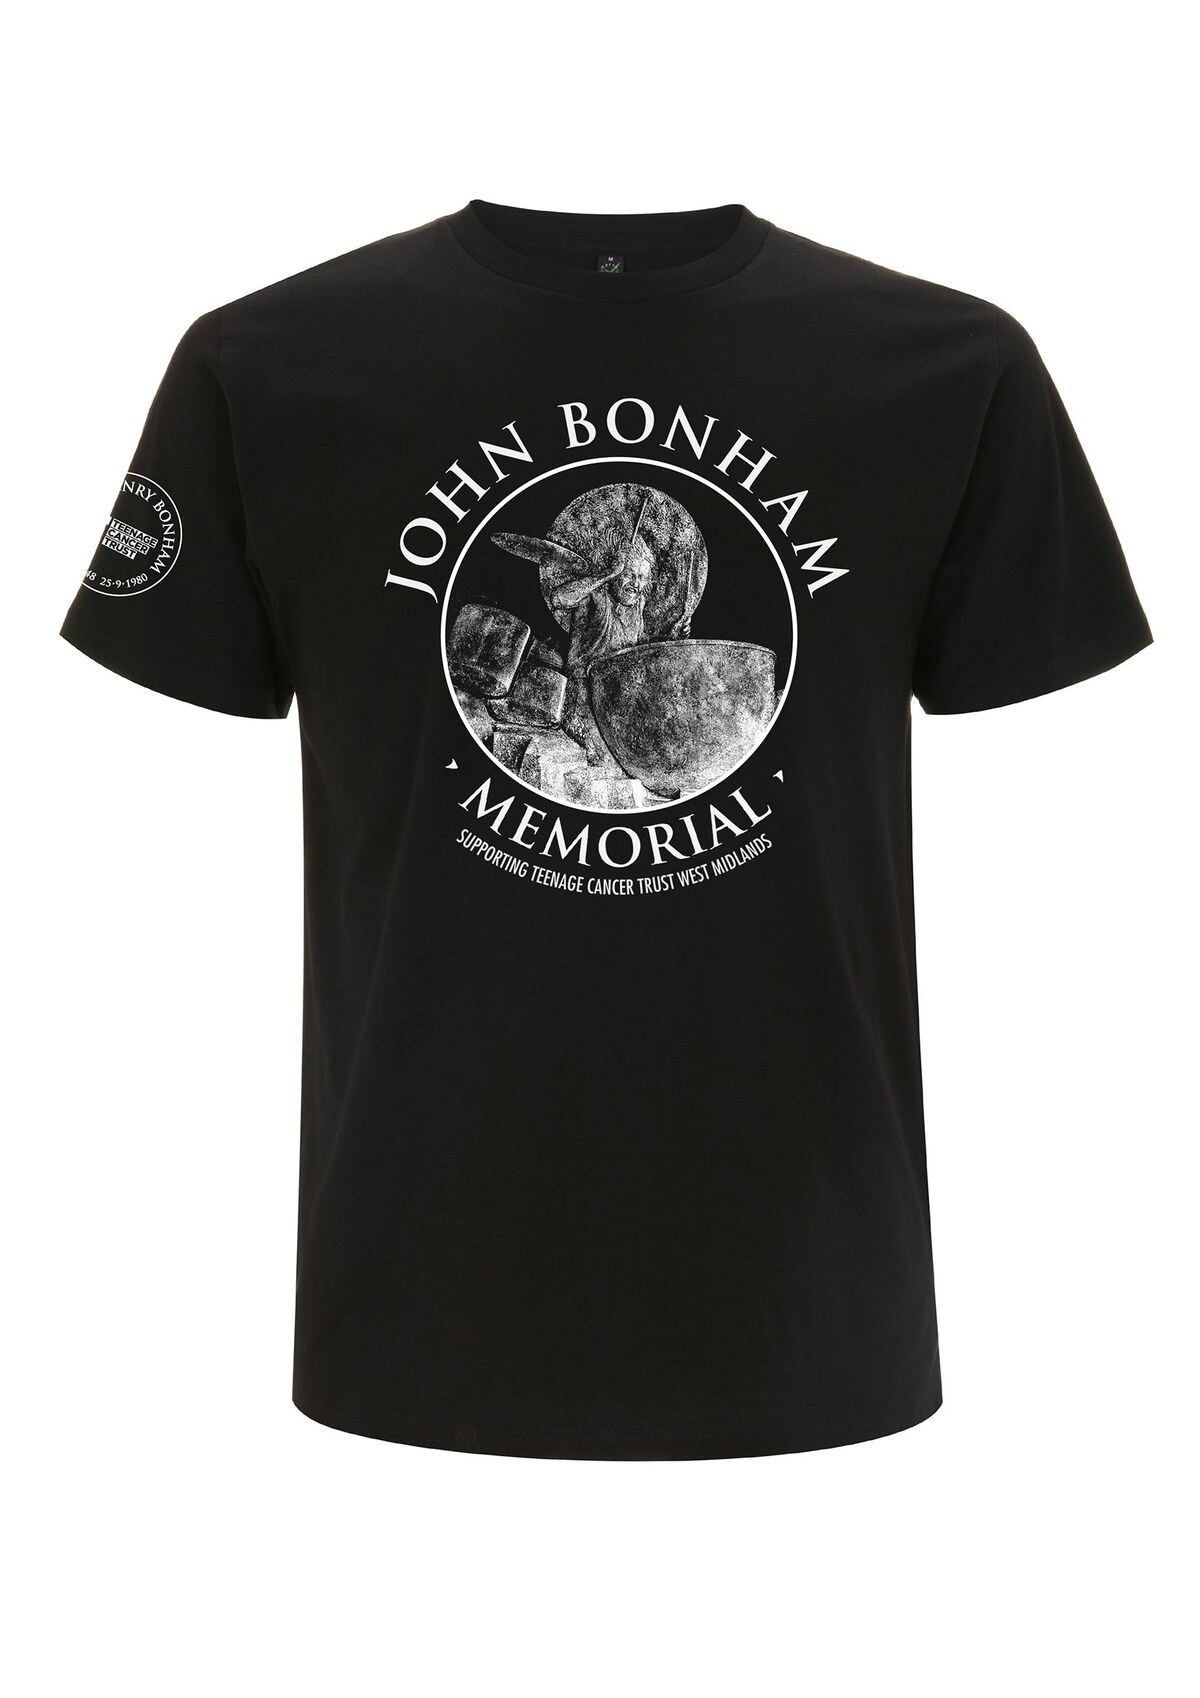 John Bonham Memorial launches exclusive T-shirt | Express & Star